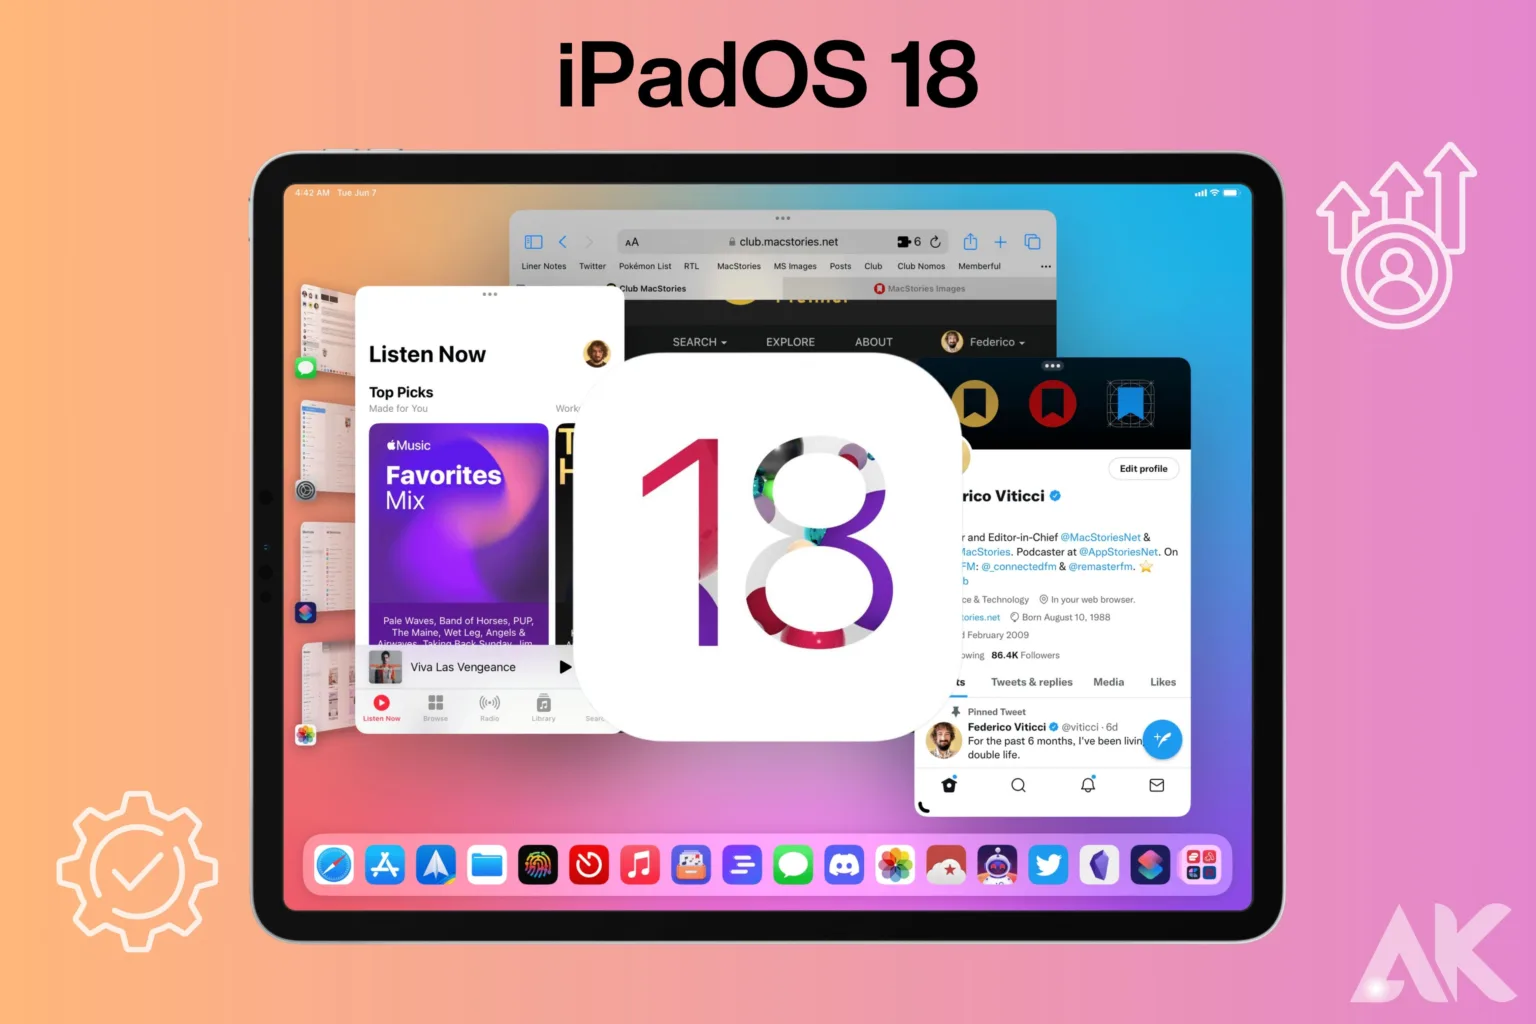 How to install iPadOS 18